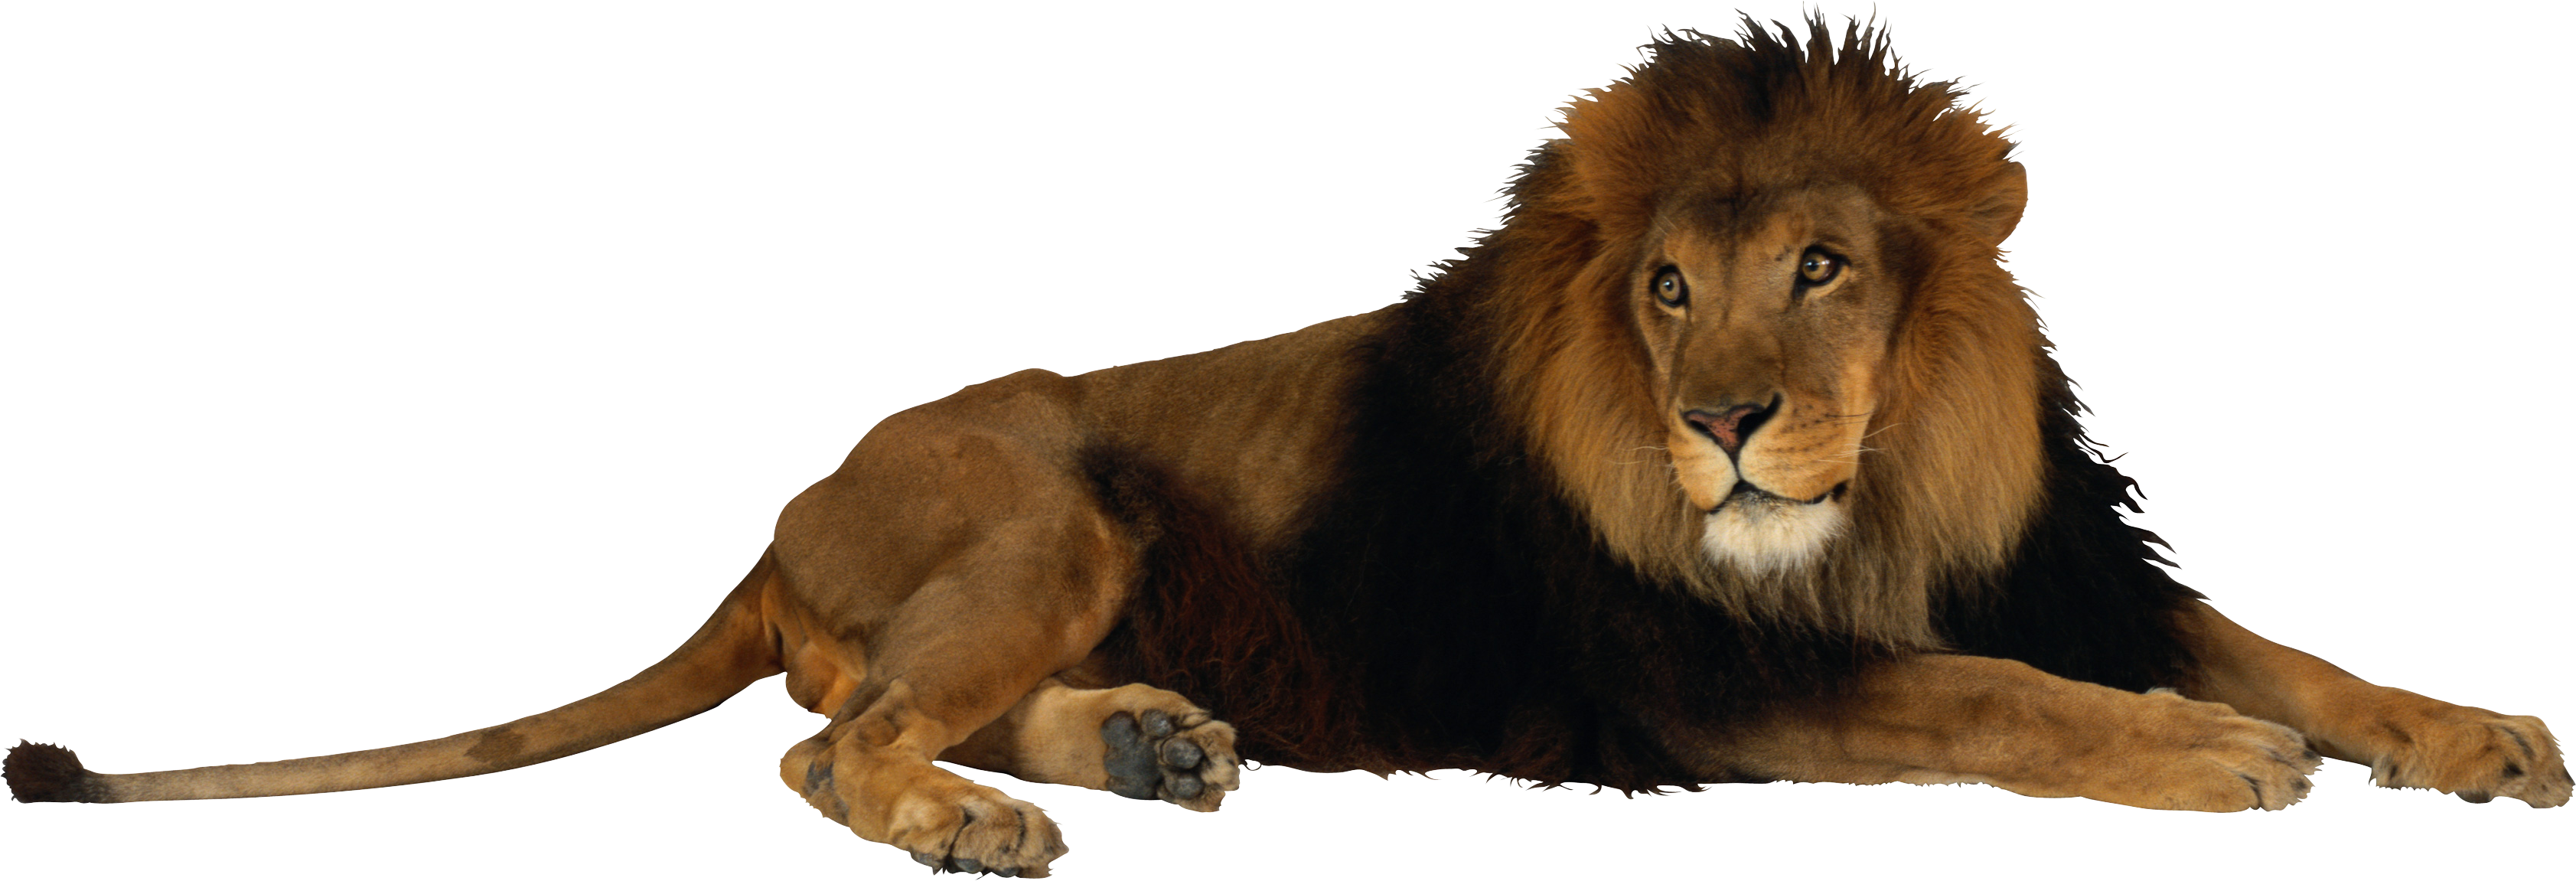 Lion PNG images image